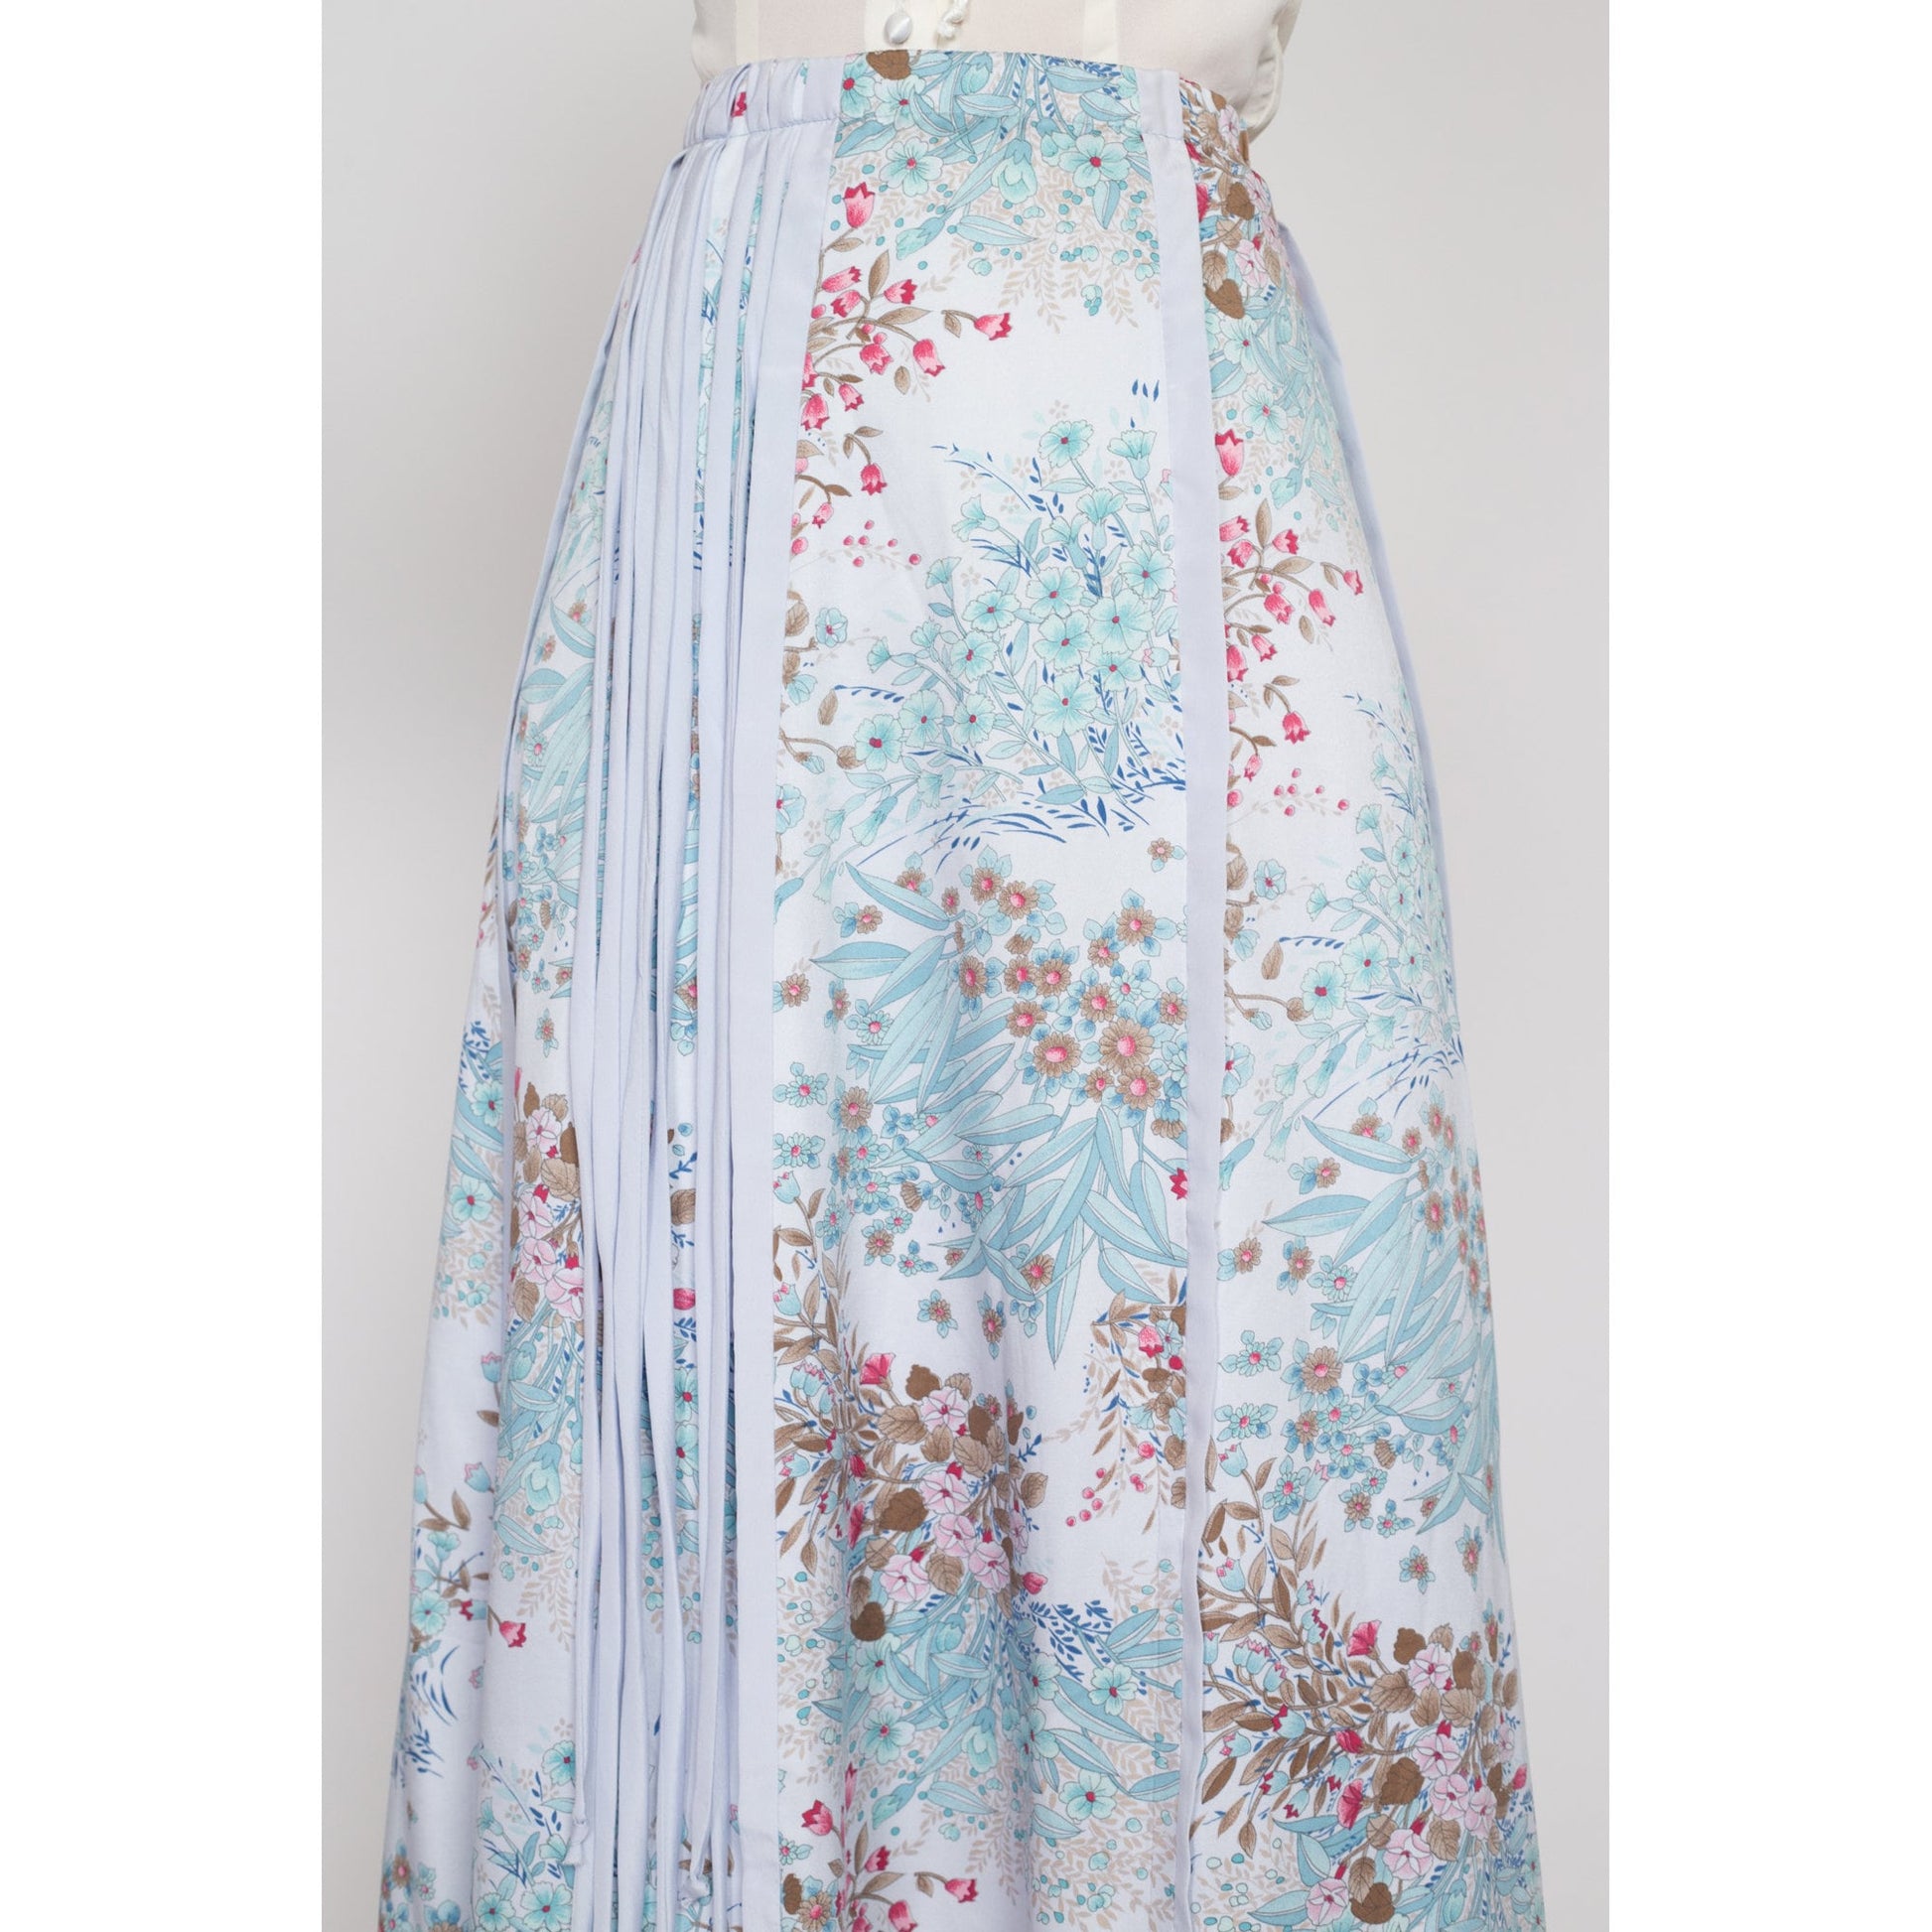 Med-Lrg 70s Chessa Davis Boho Blue Floral Tassel Maxi Skirt | Vintage A Line High Waisted Hippie Peddler Skirt